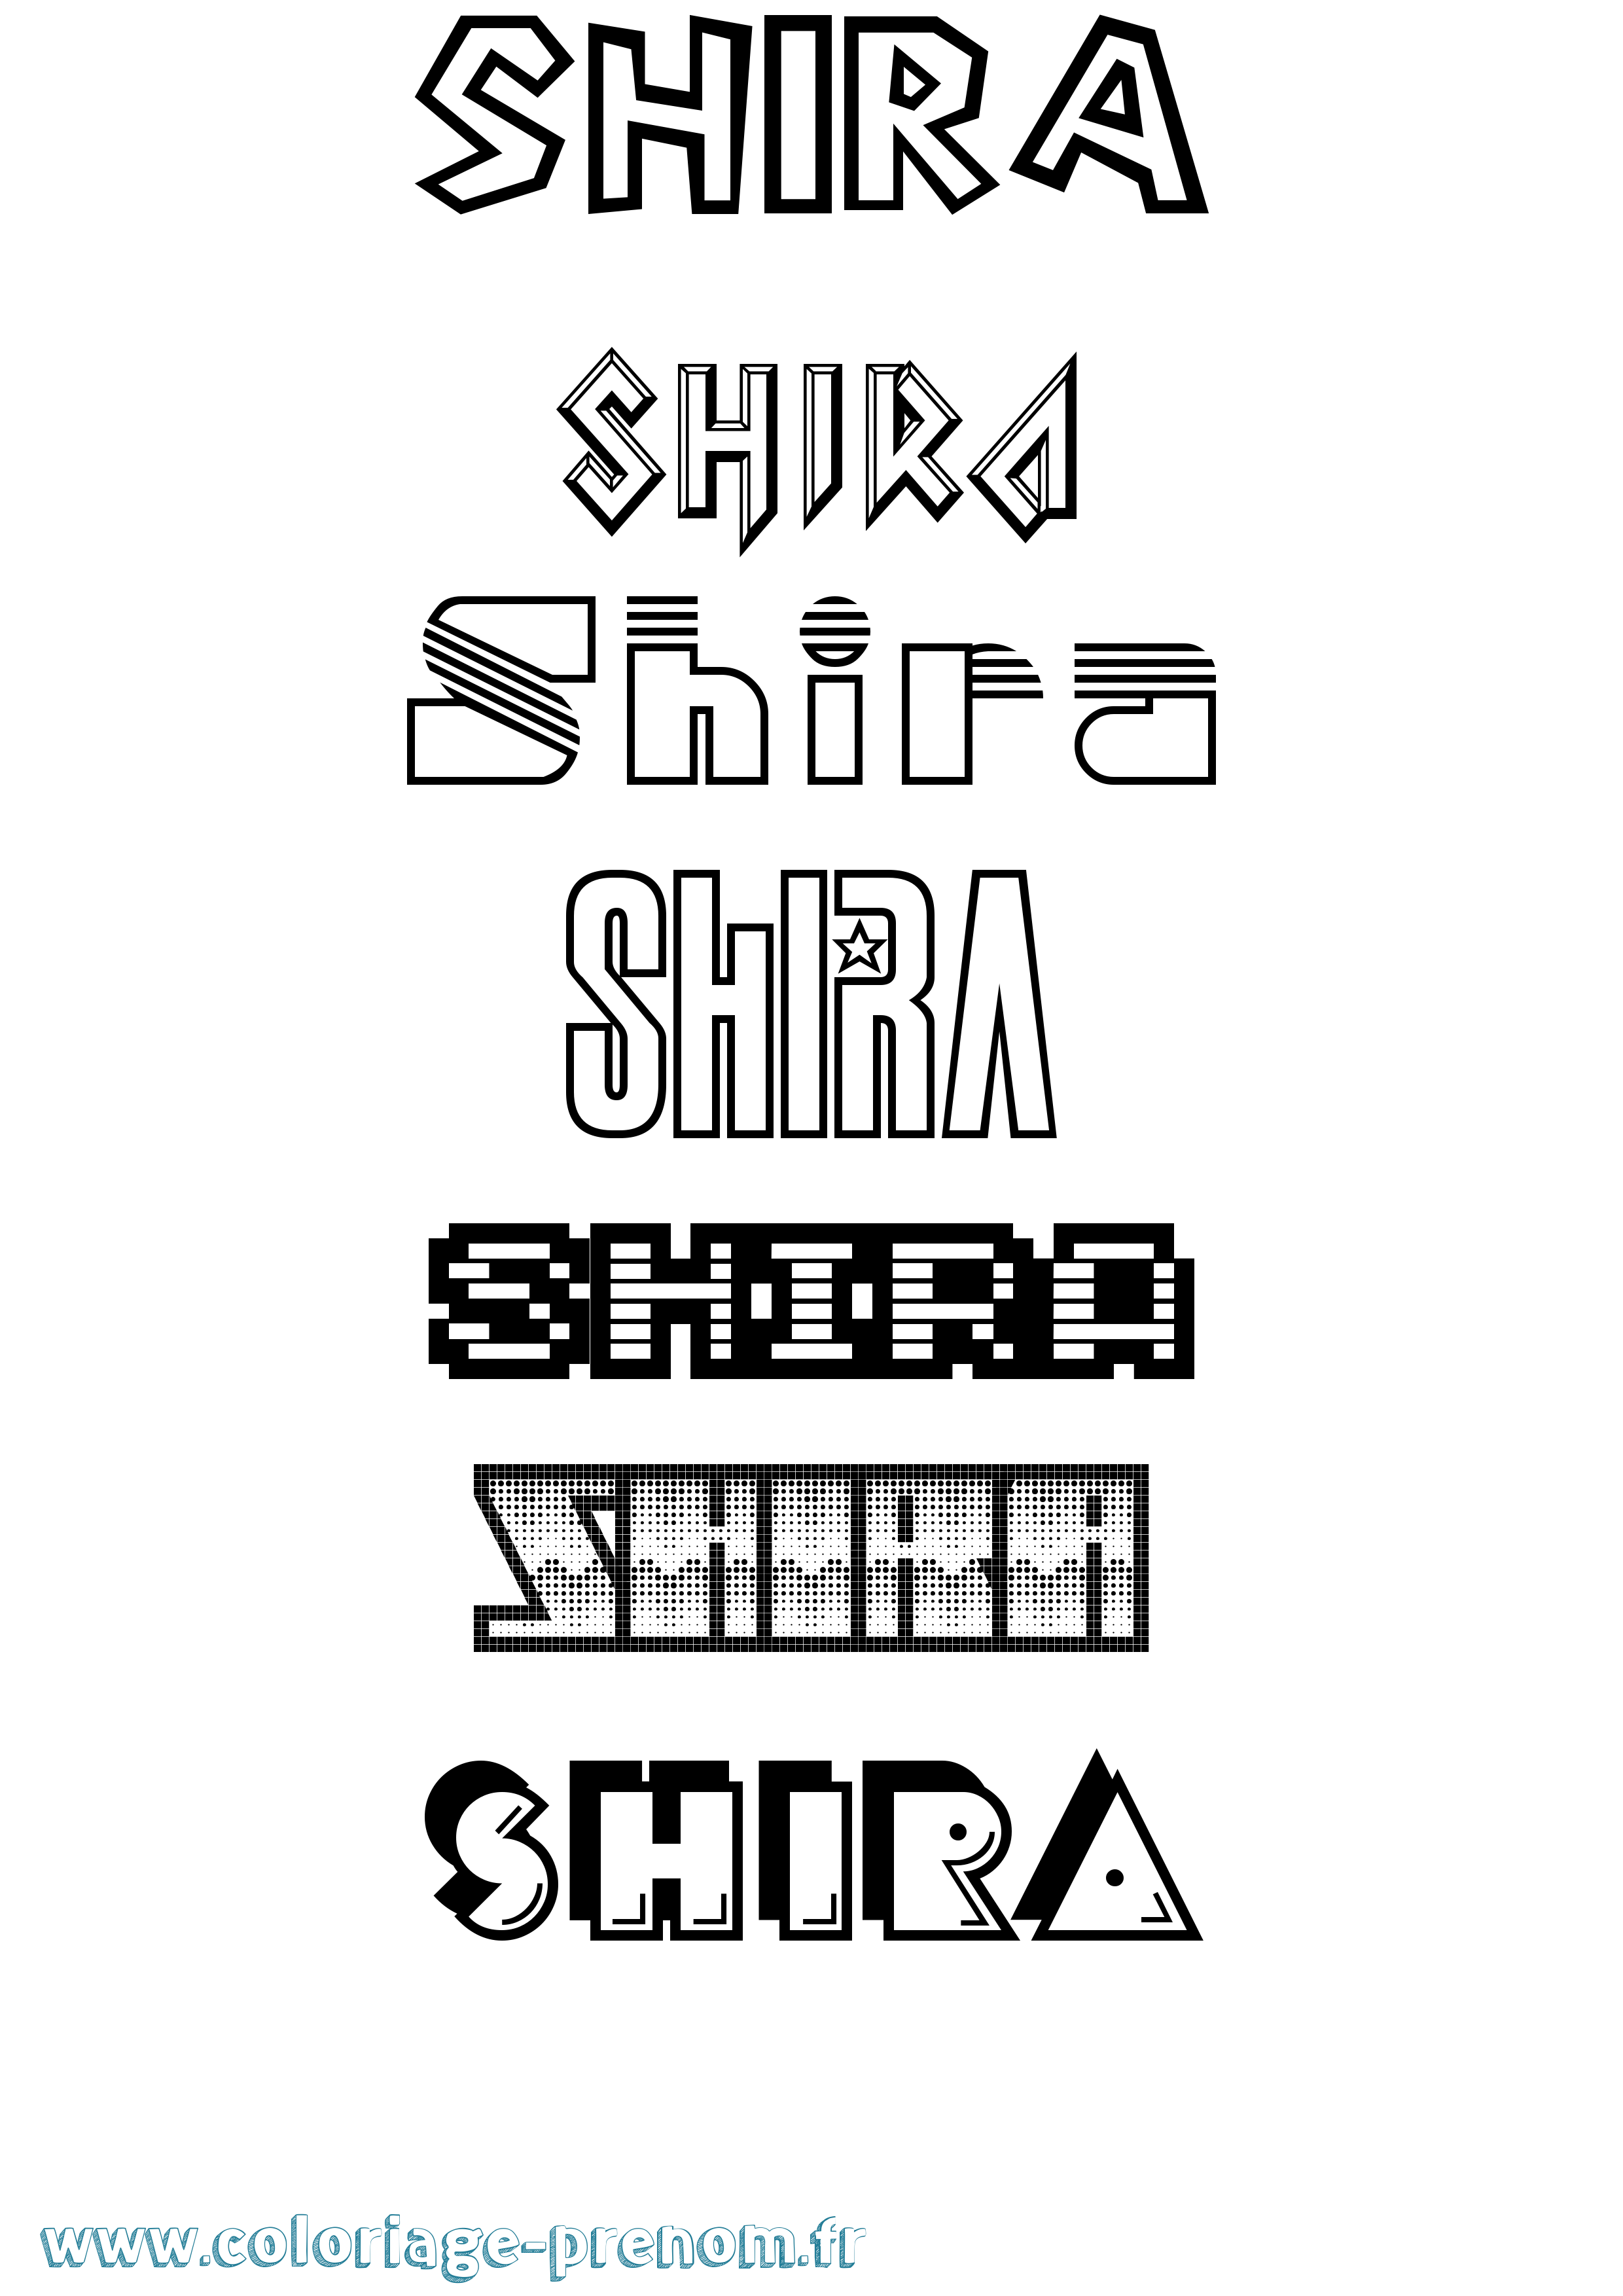 Coloriage prénom Shira Jeux Vidéos